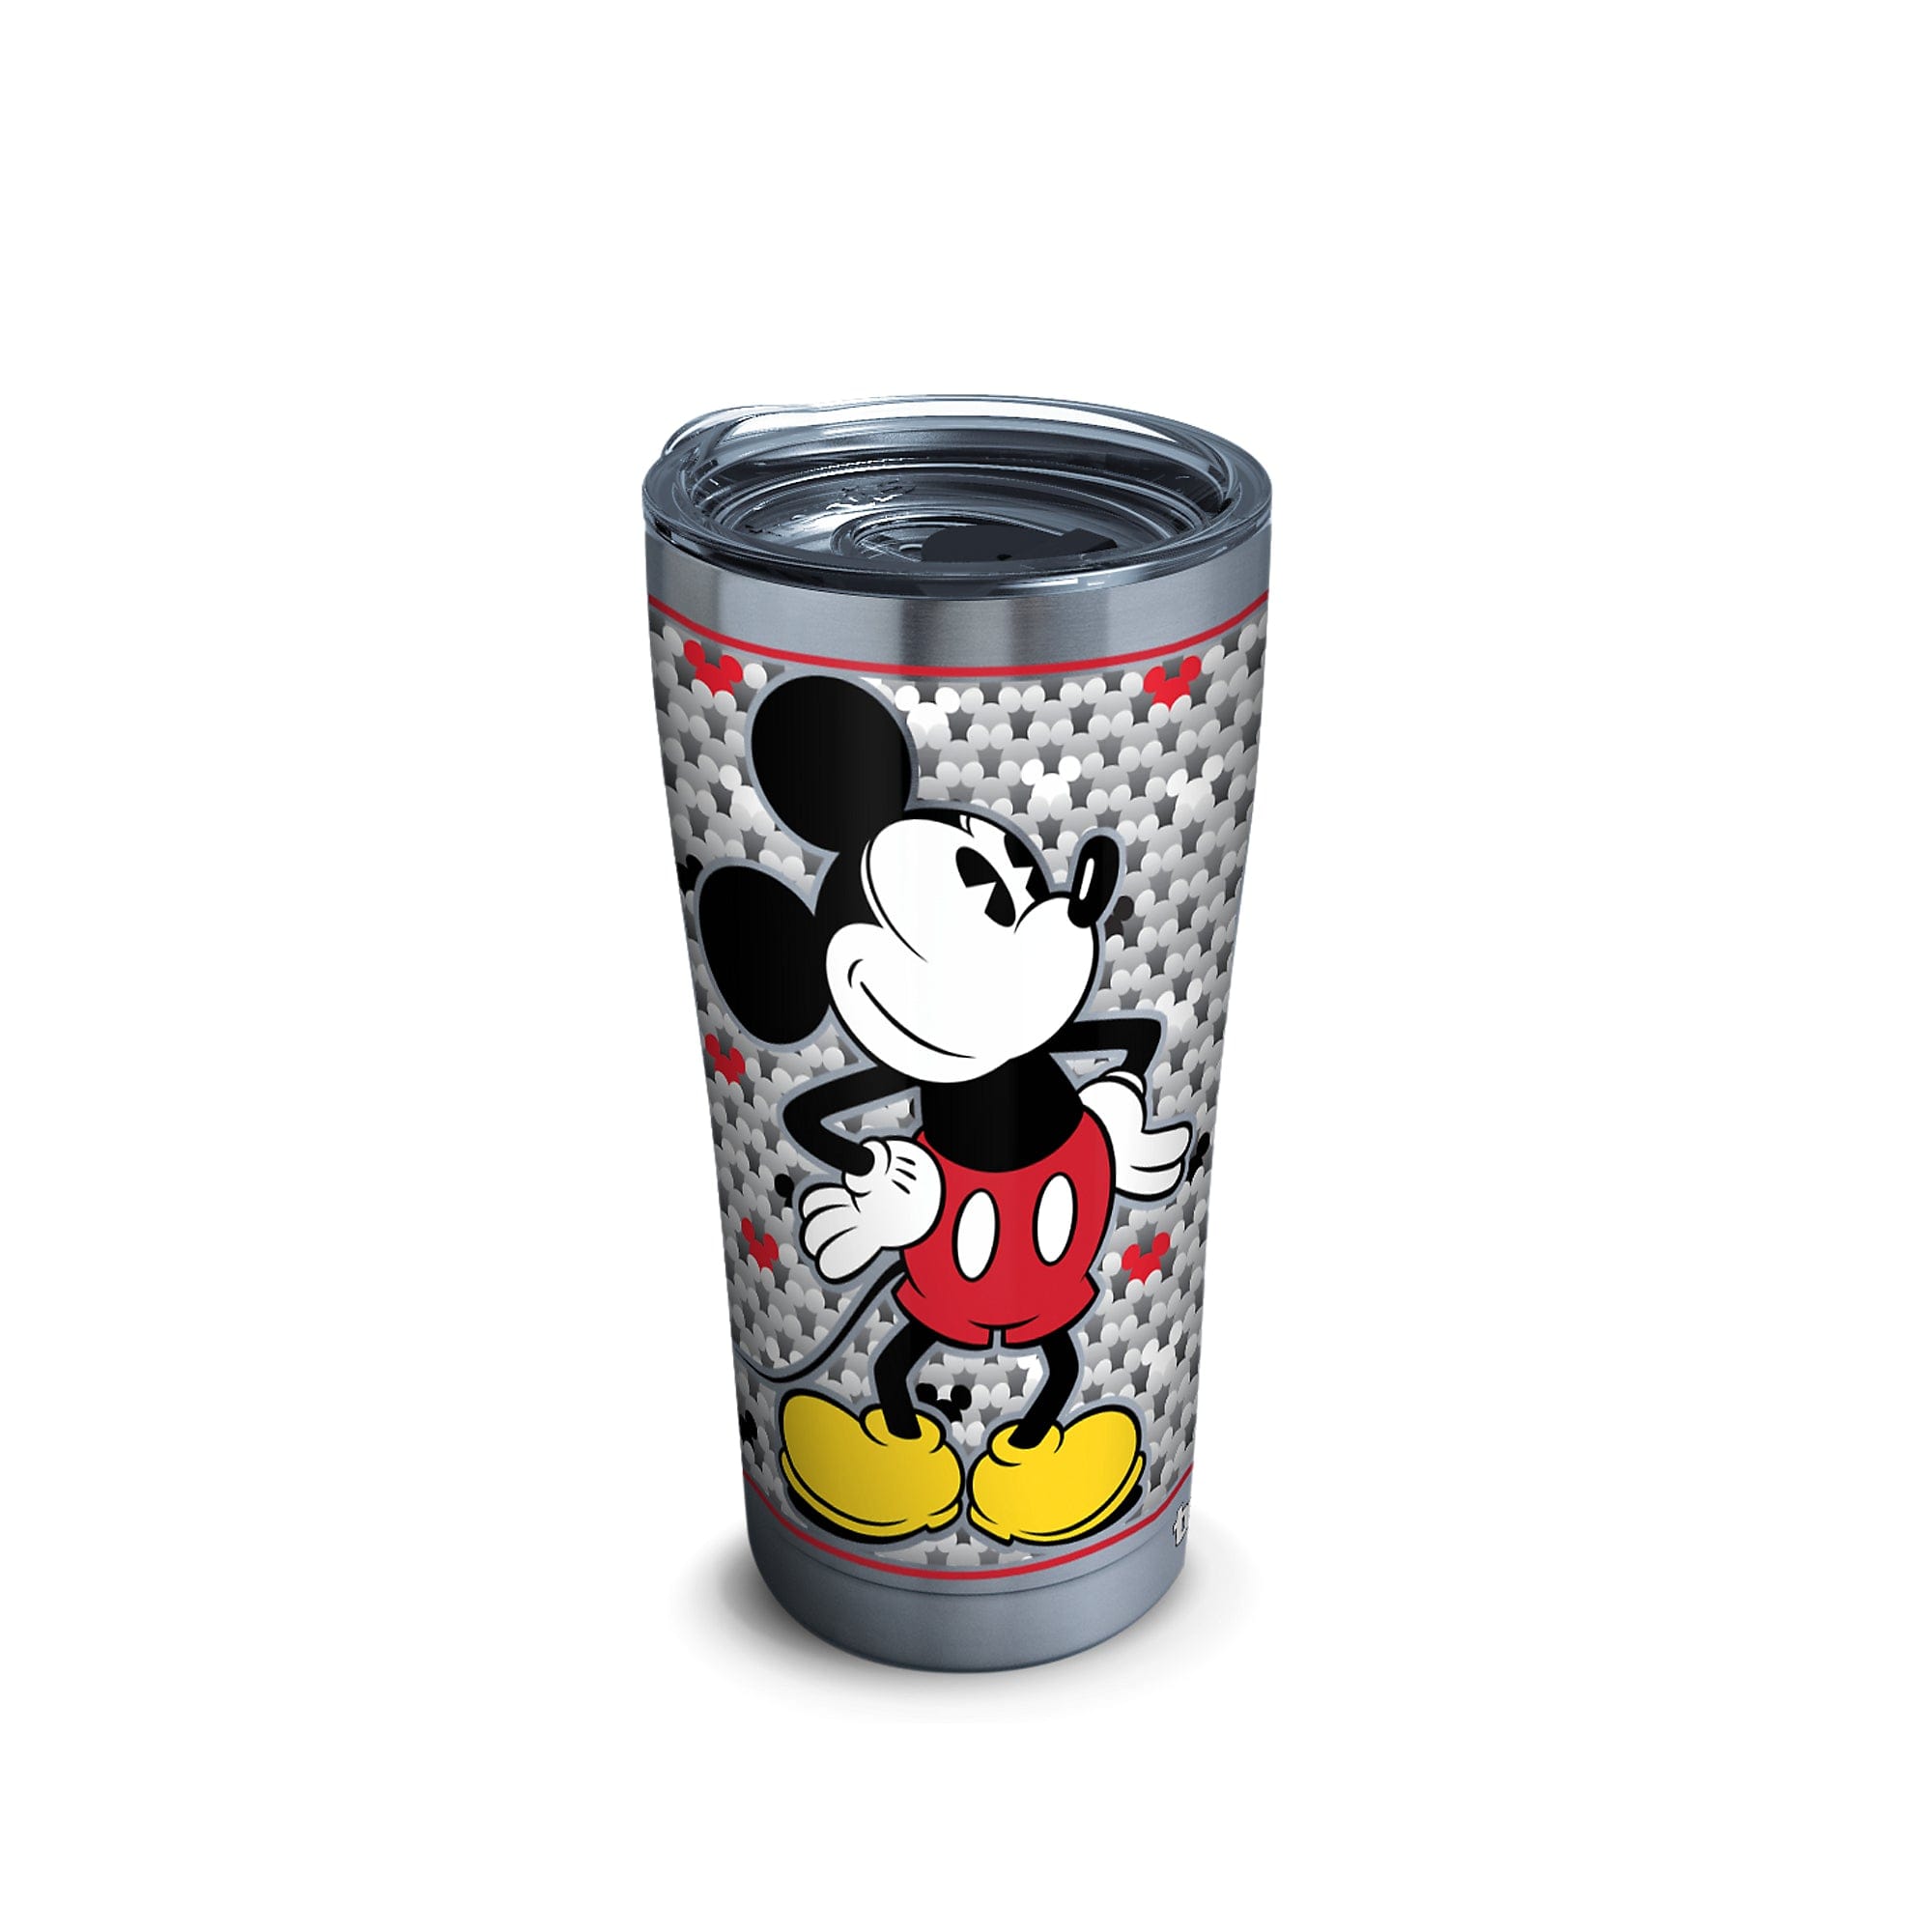 Disney Hanukkah Wine Glass Set - Mickey Mouse